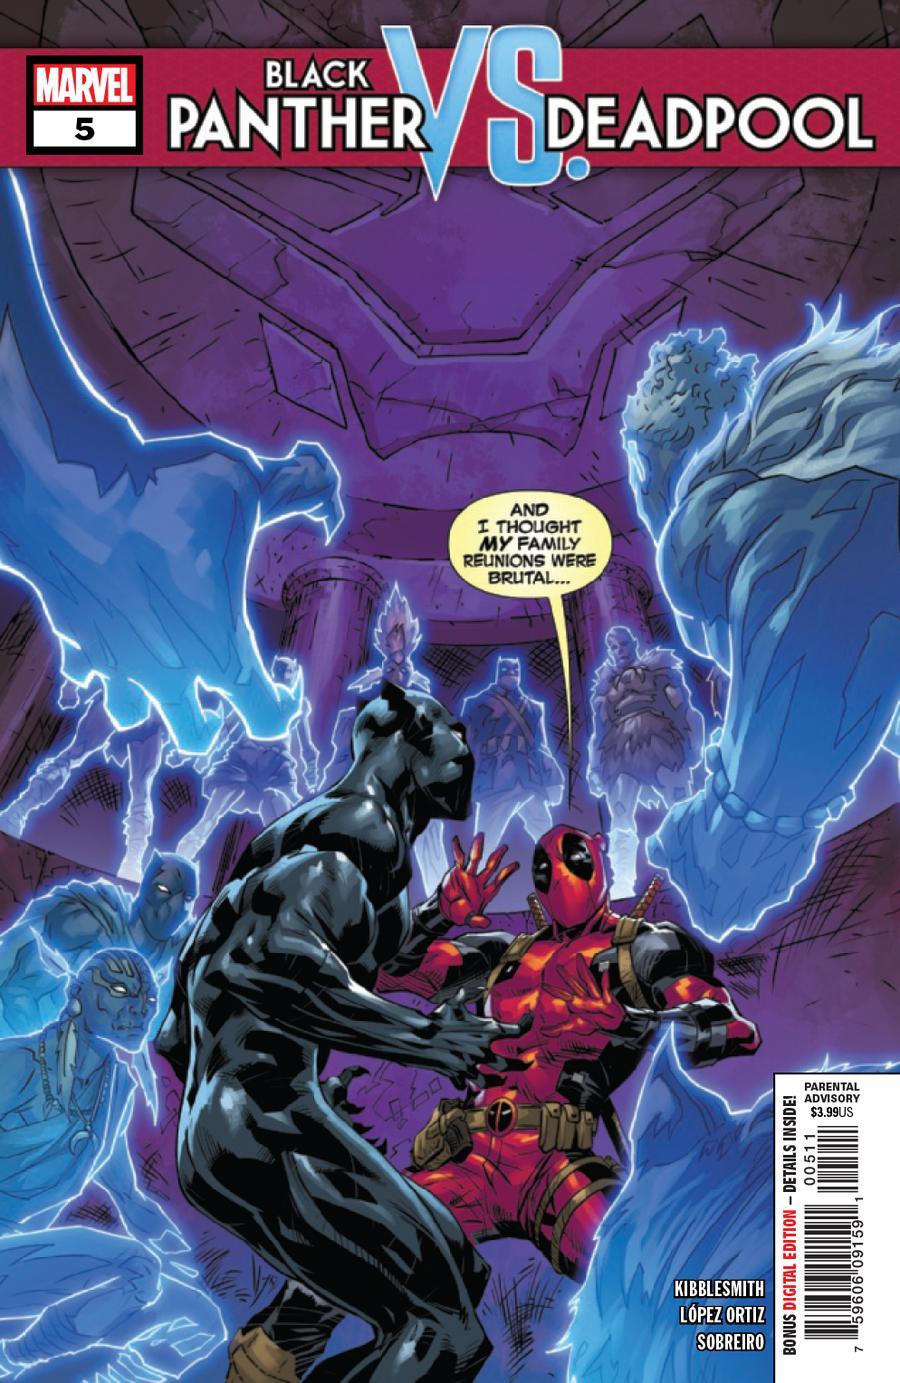 Black Panther vs Deadpool Vol. 1 #5